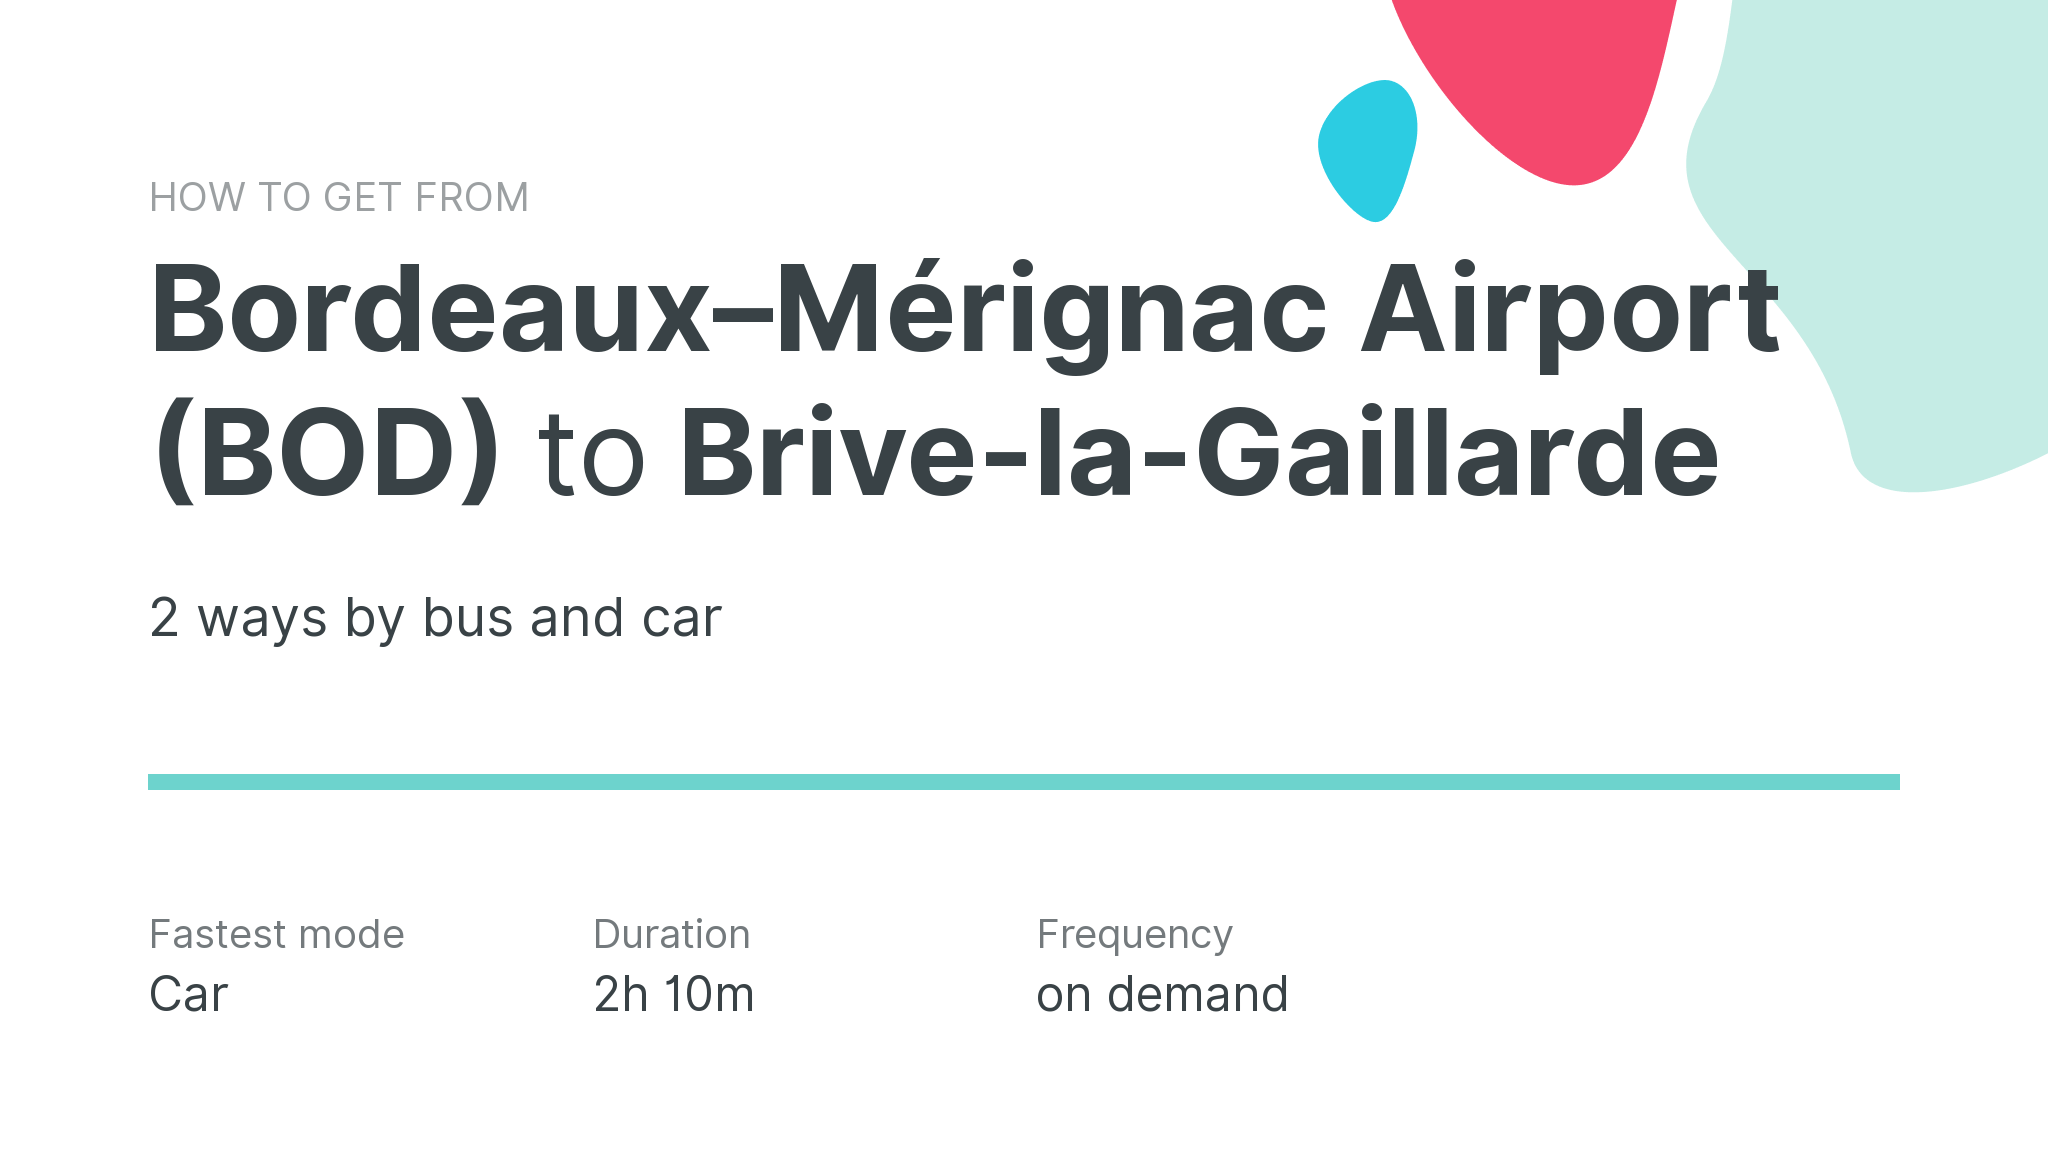 How do I get from Bordeaux–Mérignac Airport (BOD) to Brive-la-Gaillarde